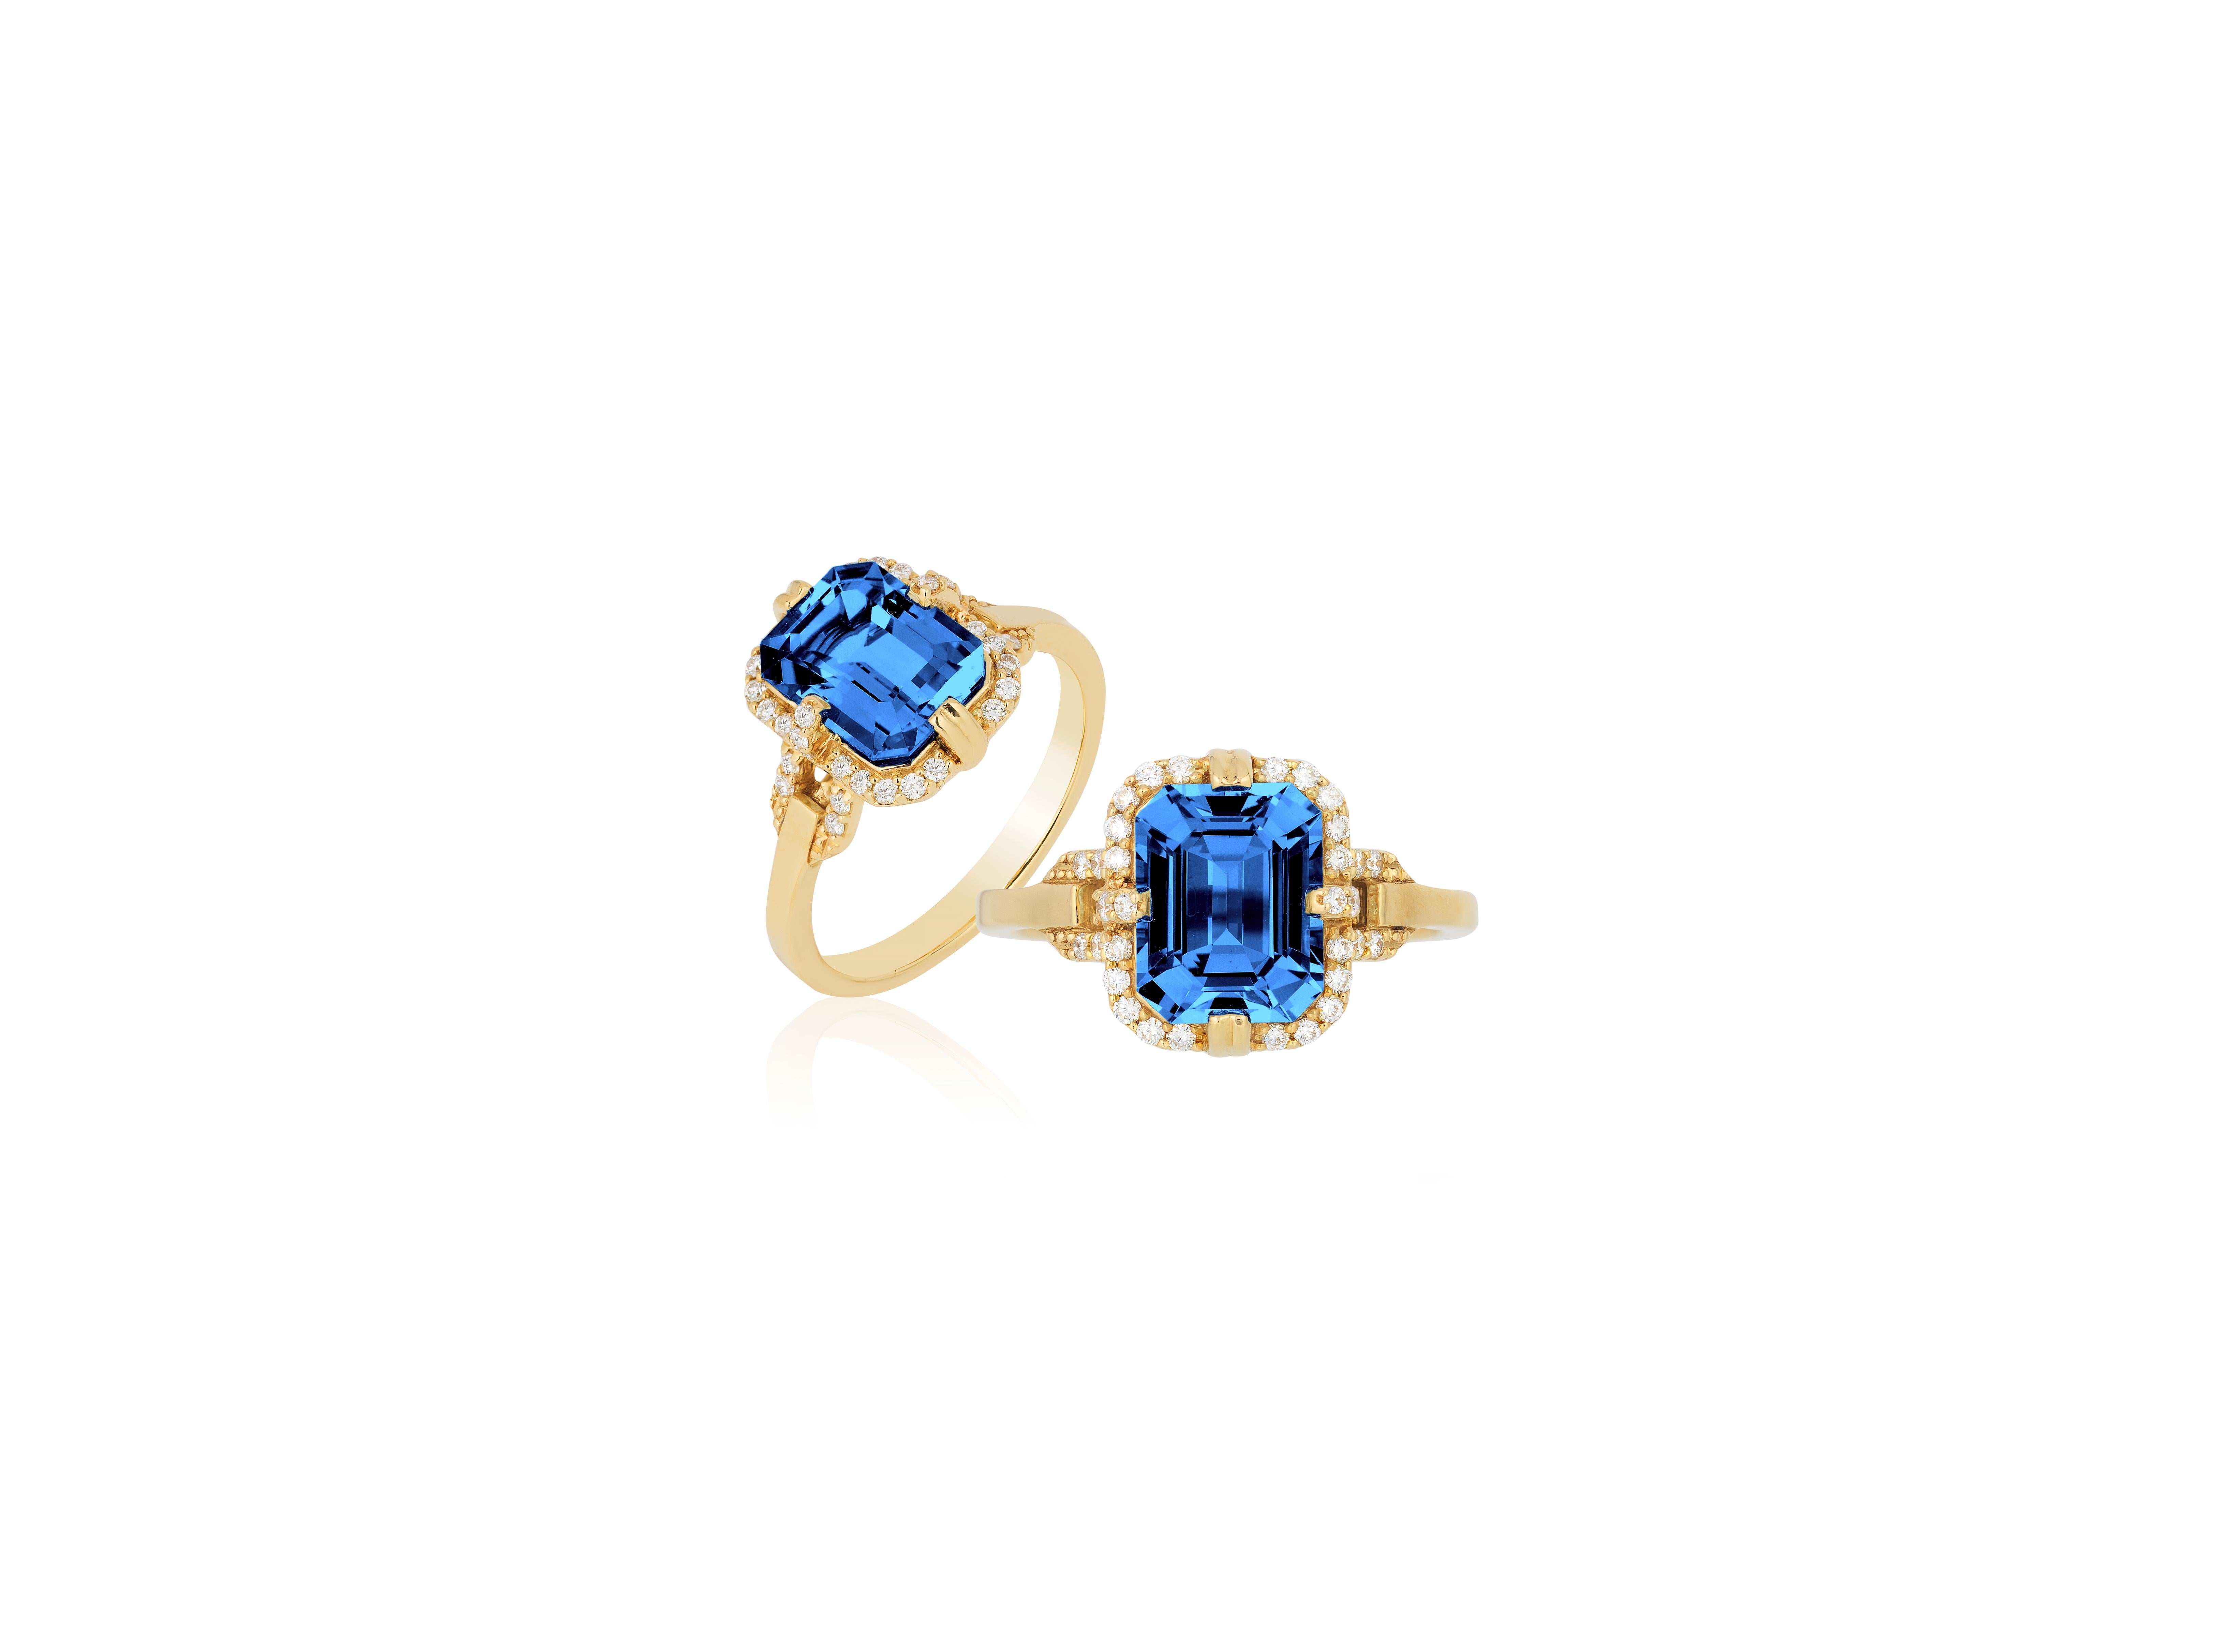 Jr0149-lbt-y
'Gossip' London Blue Topaz Emerald Cut Ring in 18K Yellow Gold with Diamonds 
9 x 7 mm Approx wt LBT: 2.82ct dia: 0.17ct